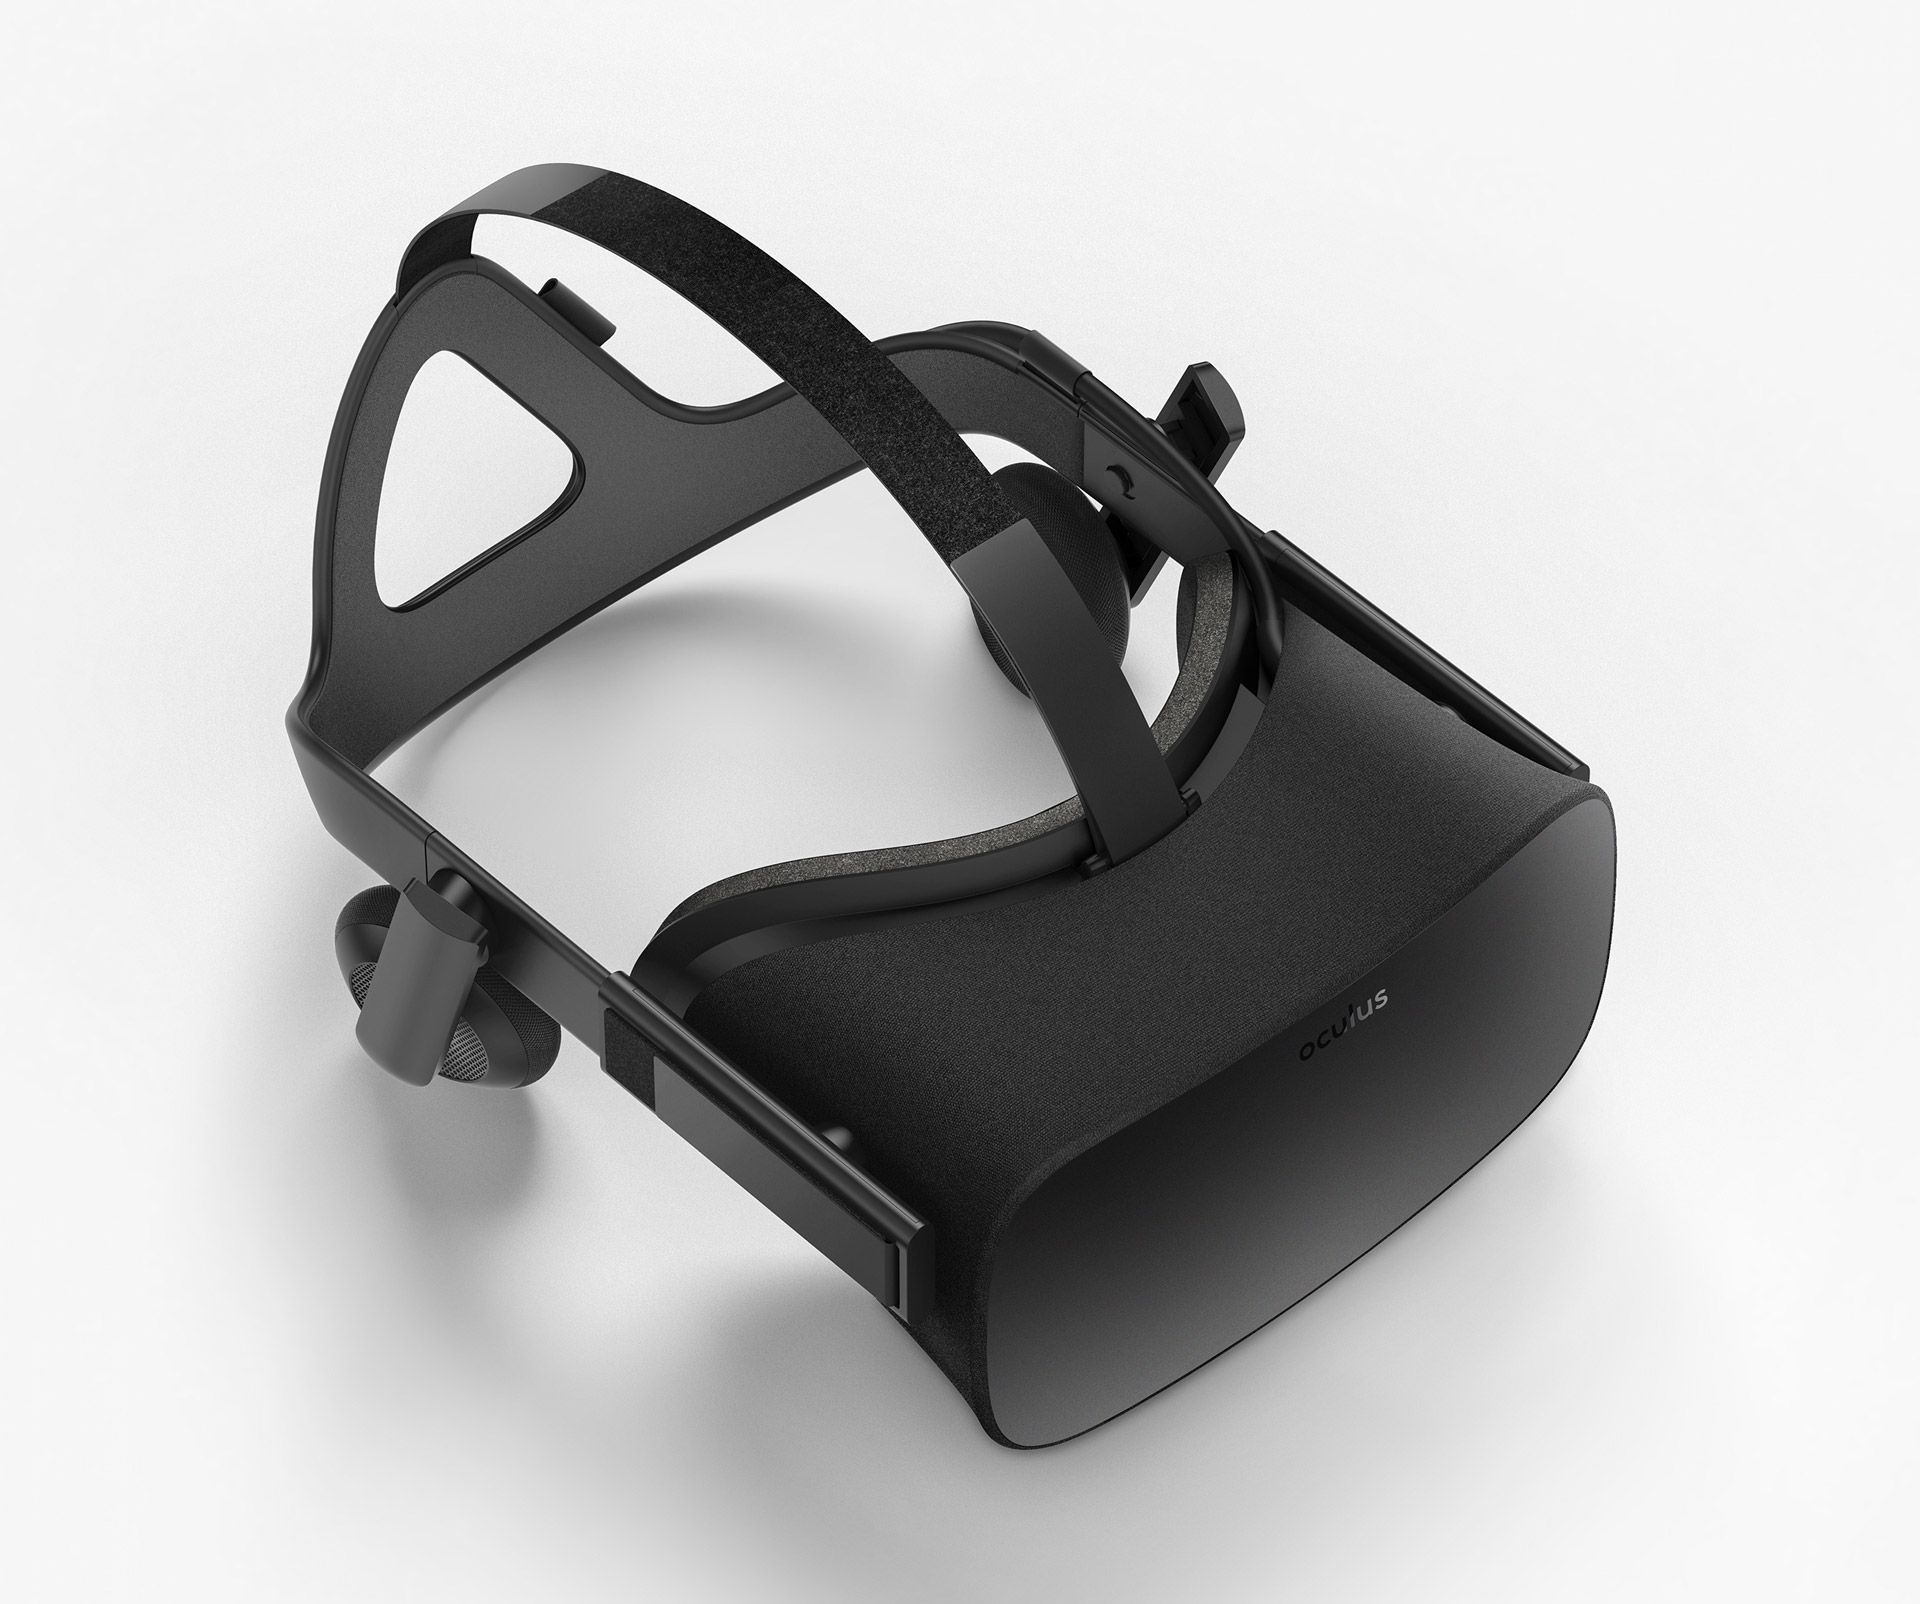 What Is Oculus Rift?